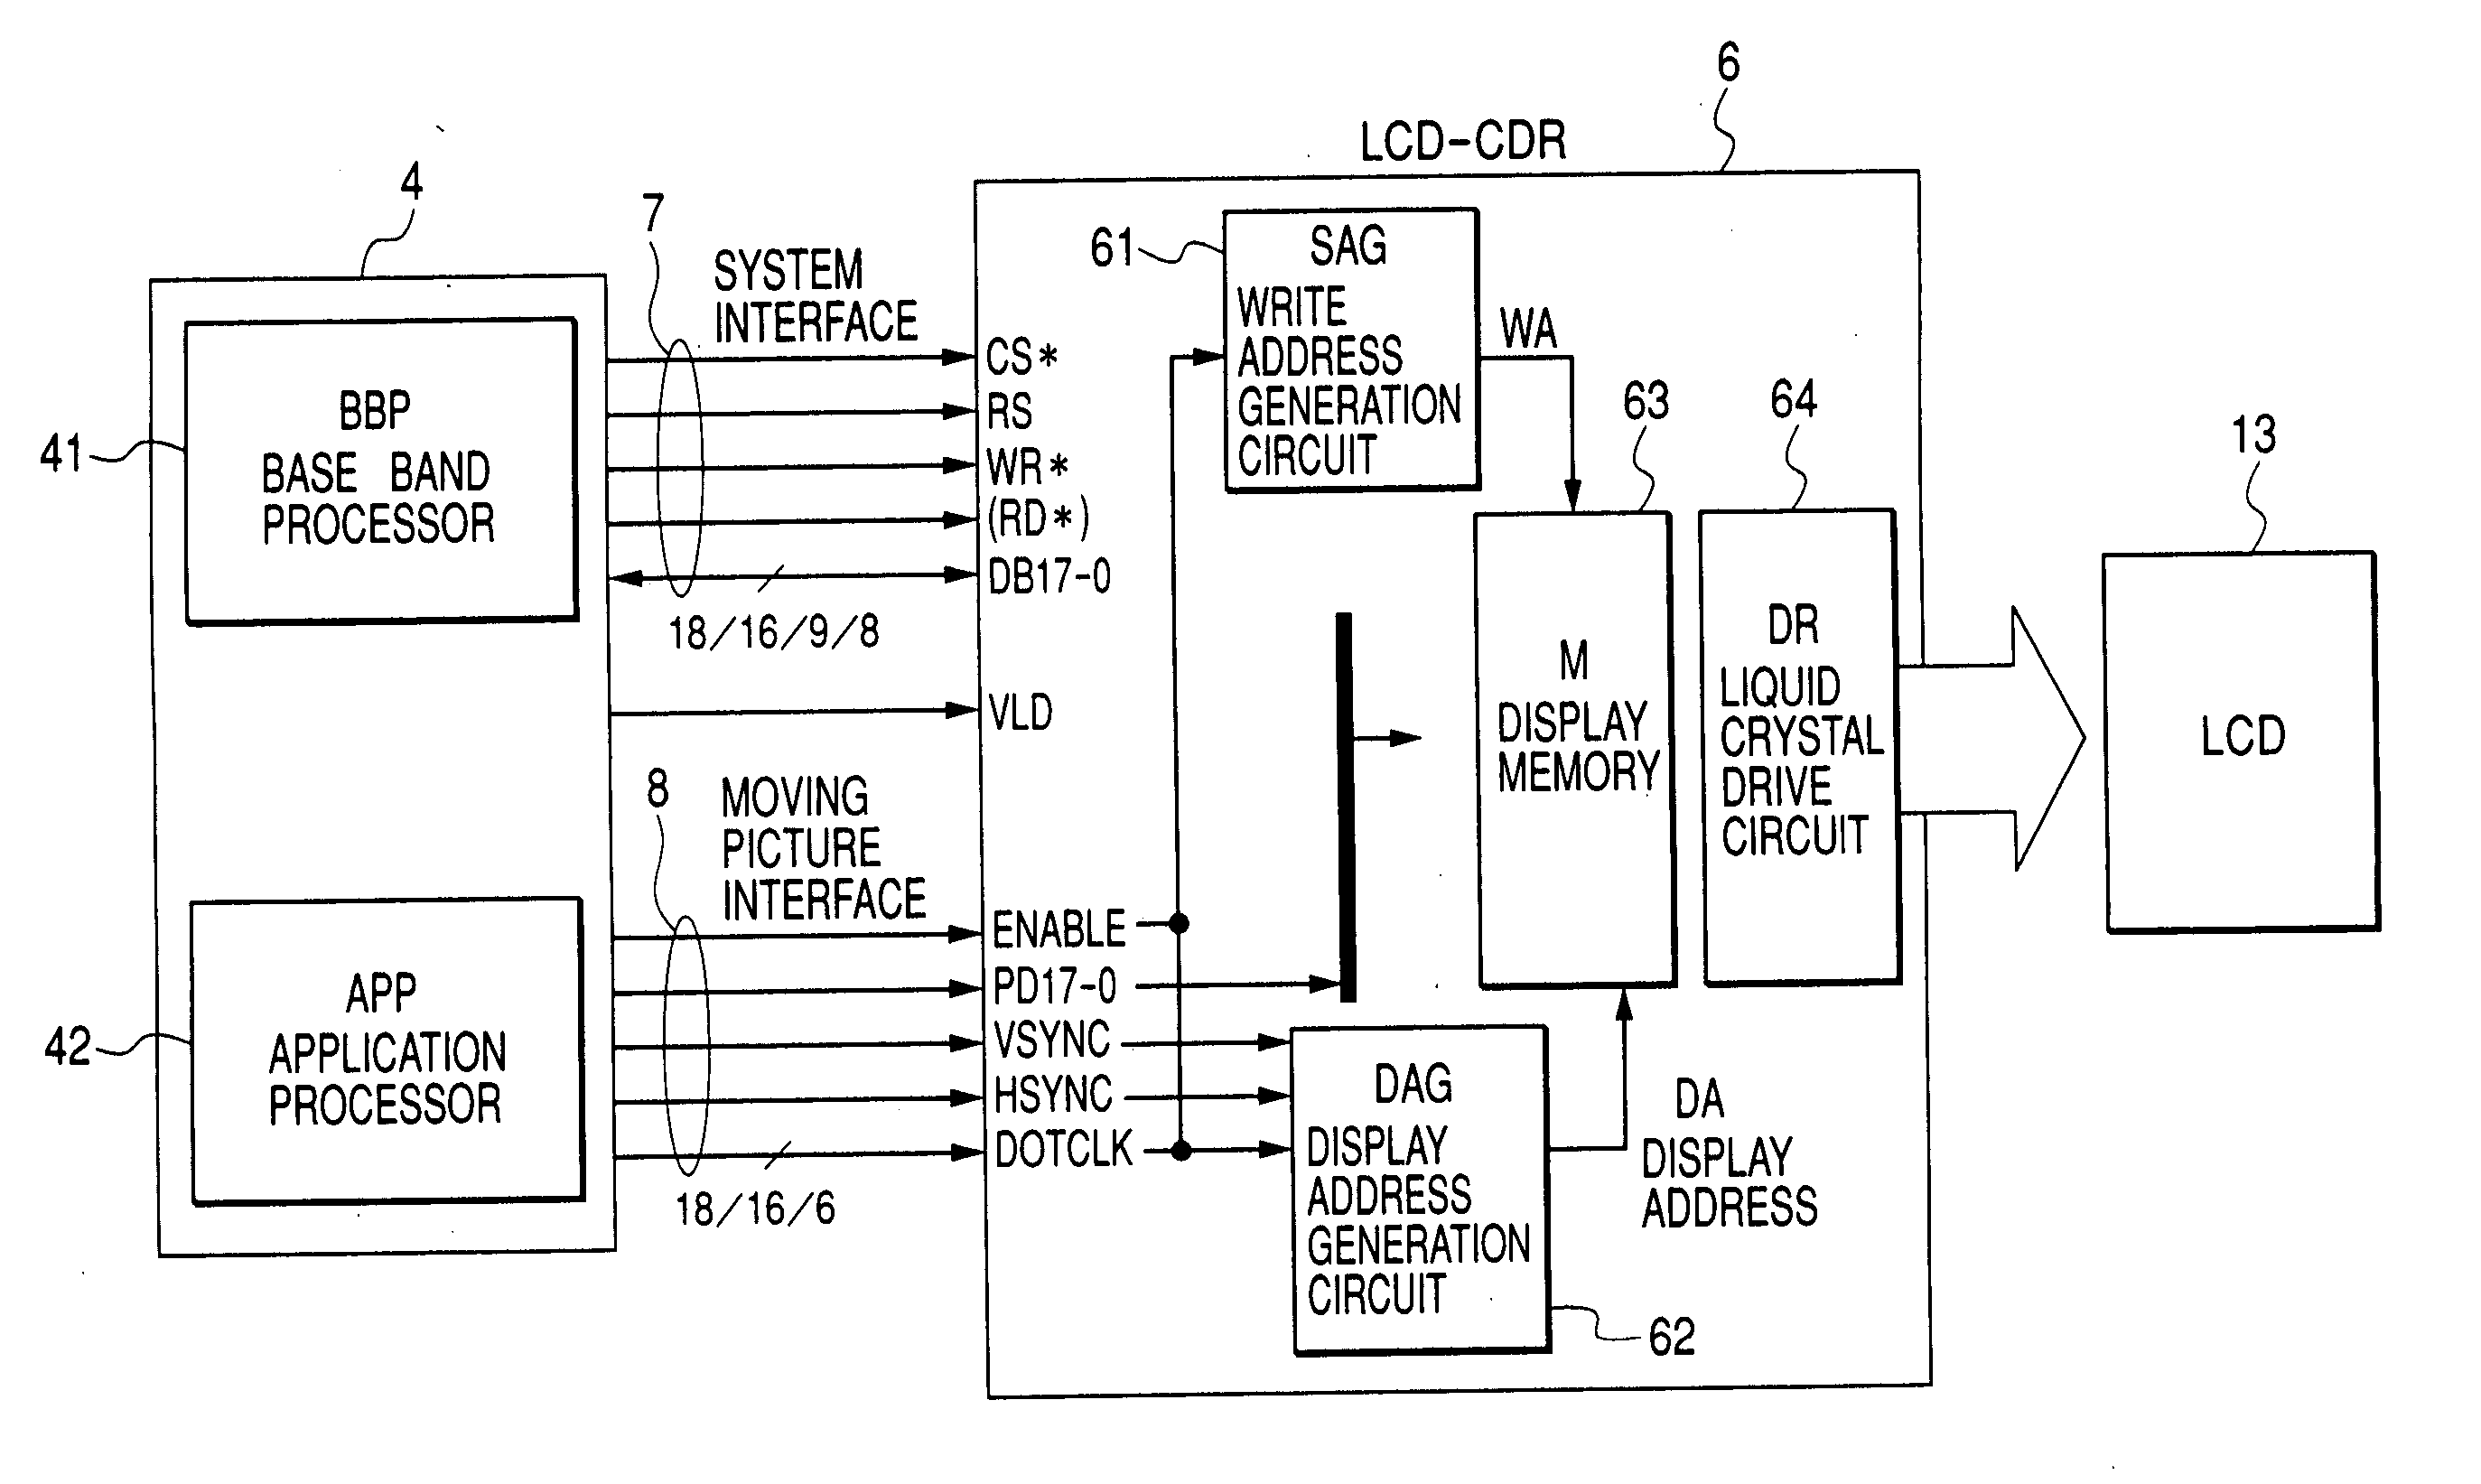 Display drive control circuit